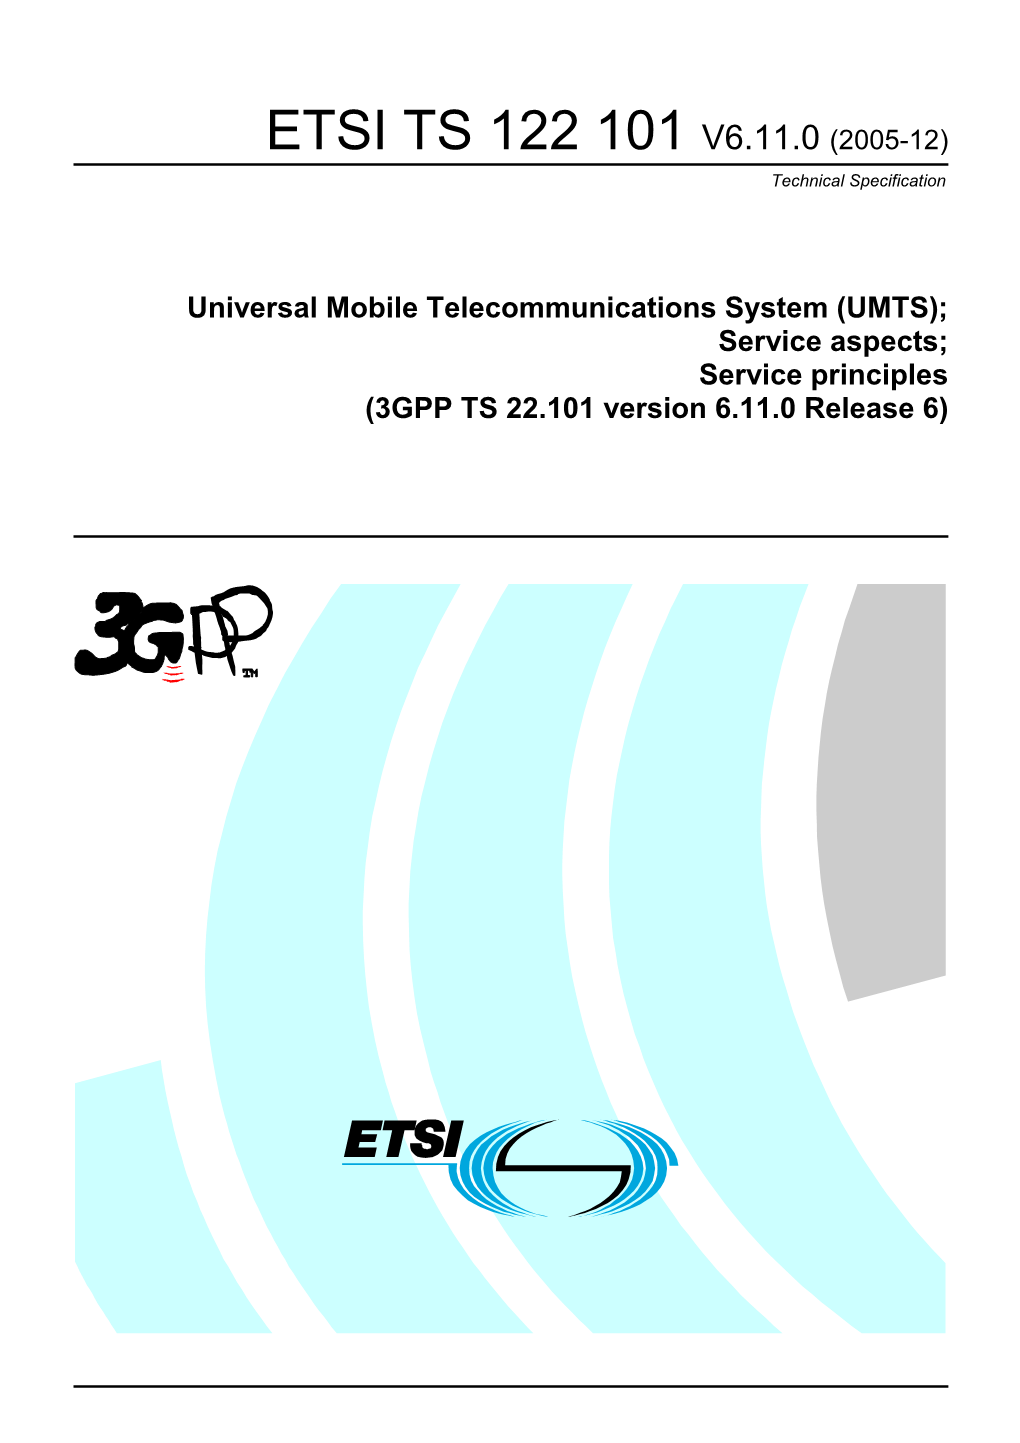 ETSI TS 122 101 V6.11.0 (2005-12) Technical Specification